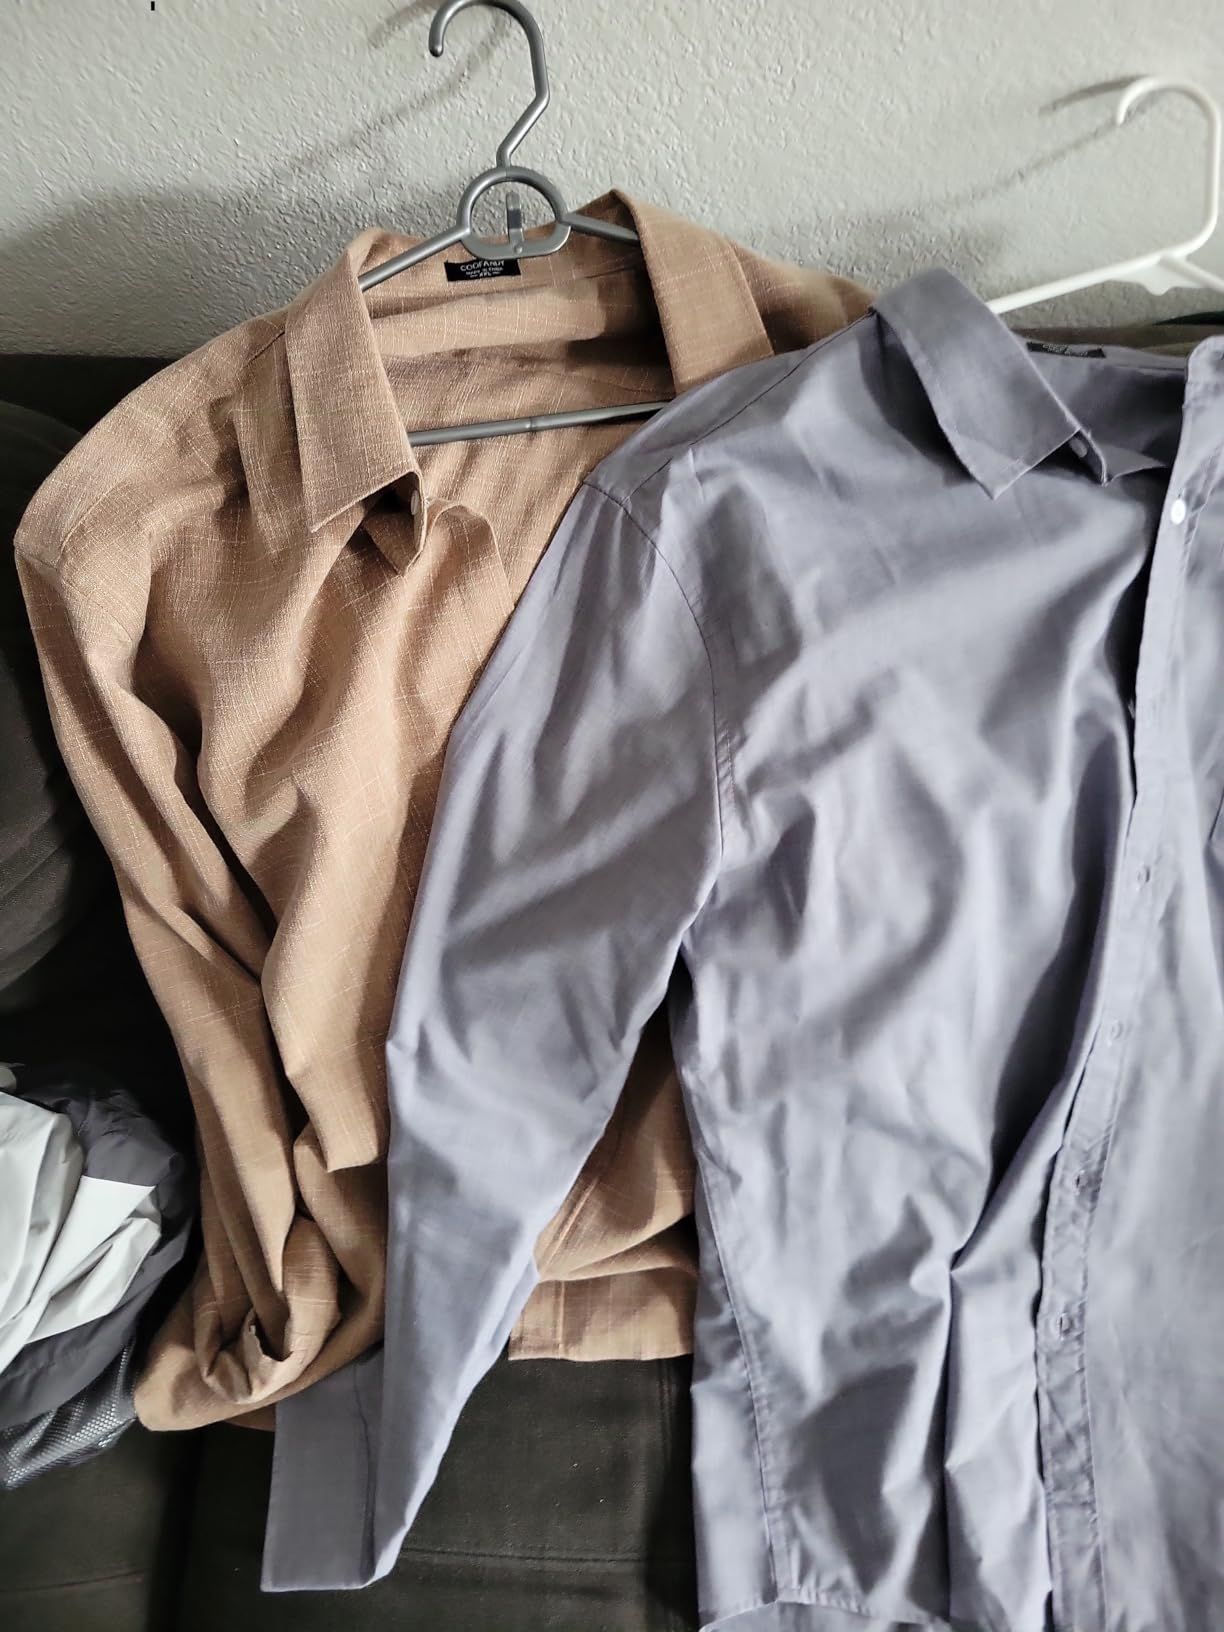 COOFANDY Men's Casual Button Down Shirt Long Sleeve Linen Chambray Shirt | Amazon (US)